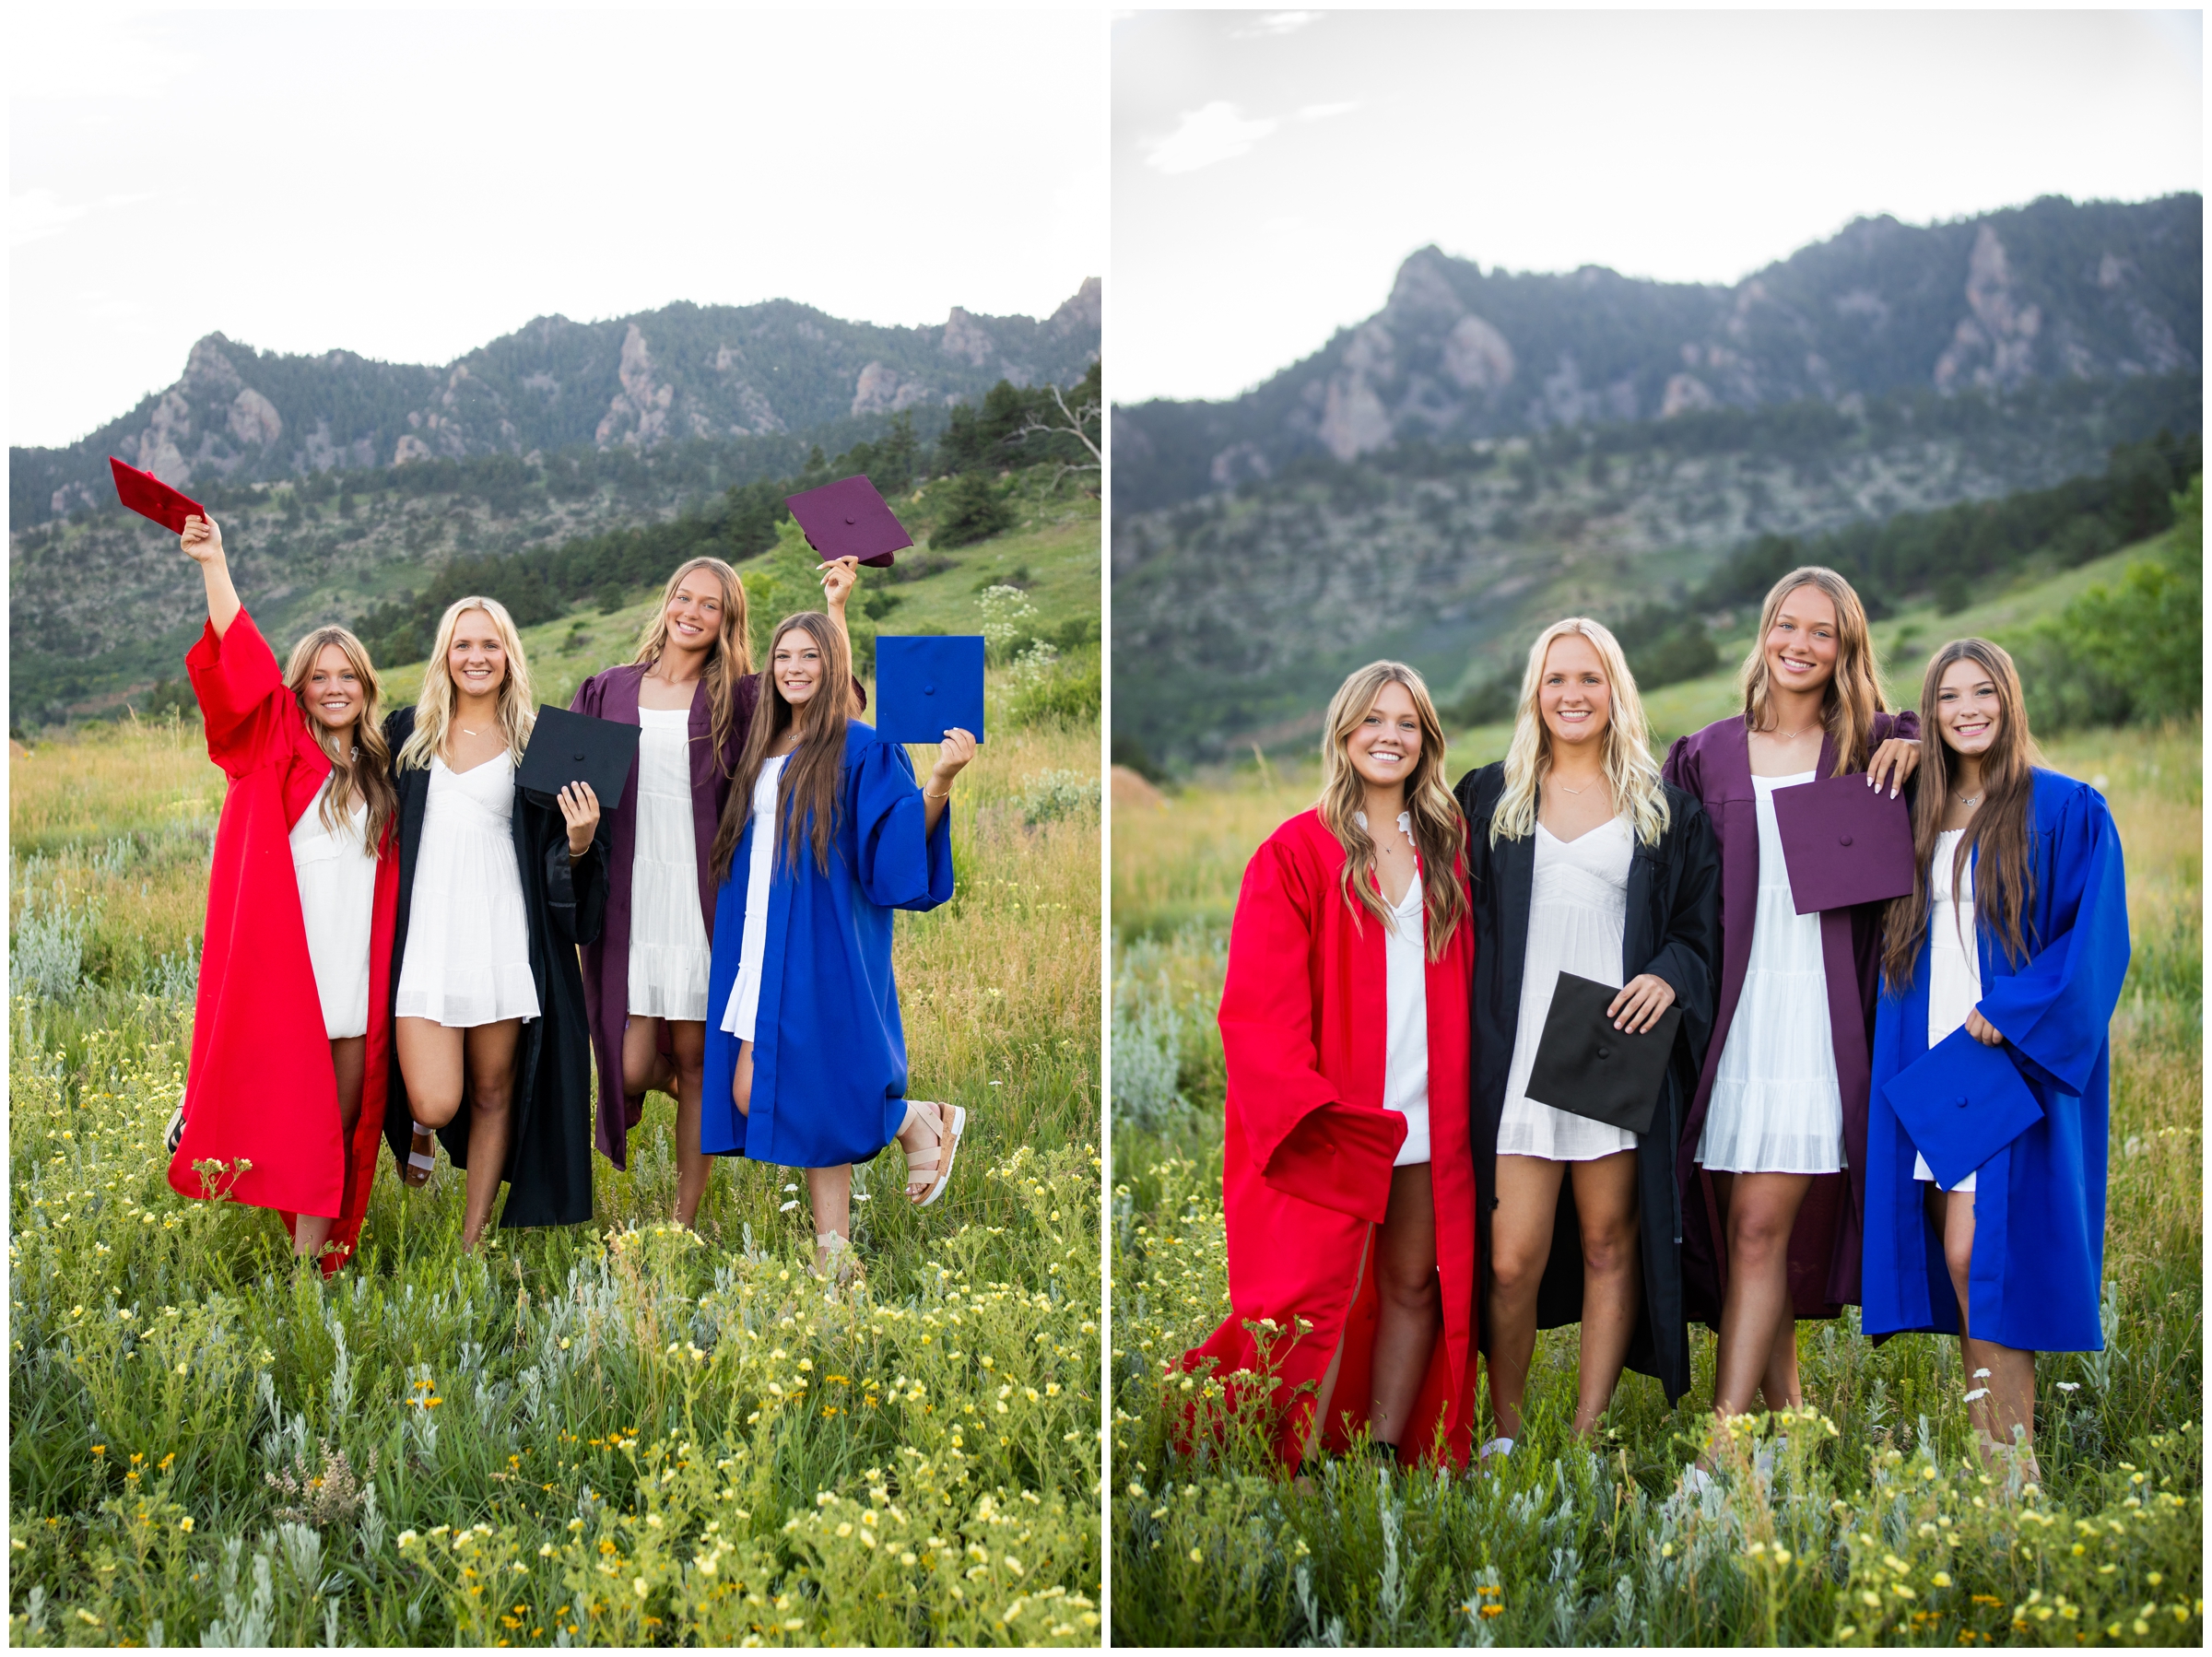 Boulder cap and gown graduation photos at South Mesa Trail by Colorado senior photographer Plum Pretty Photography